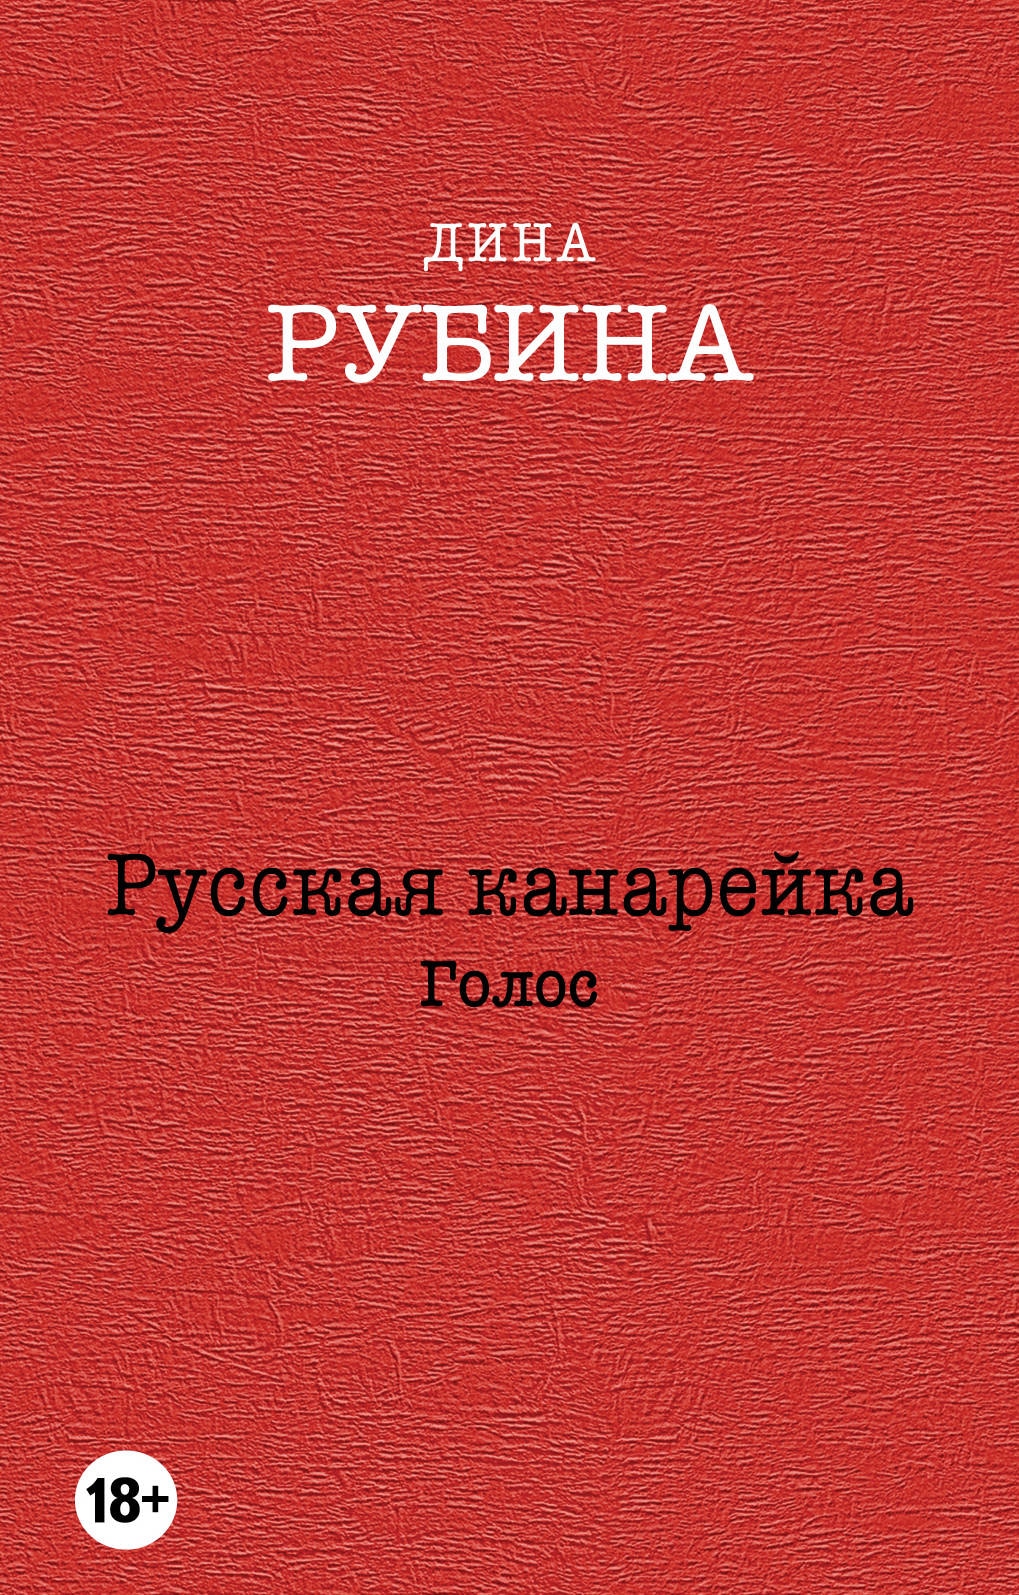 Book “Русская канарейка. Голос” by Дина Рубина — February 13, 2020